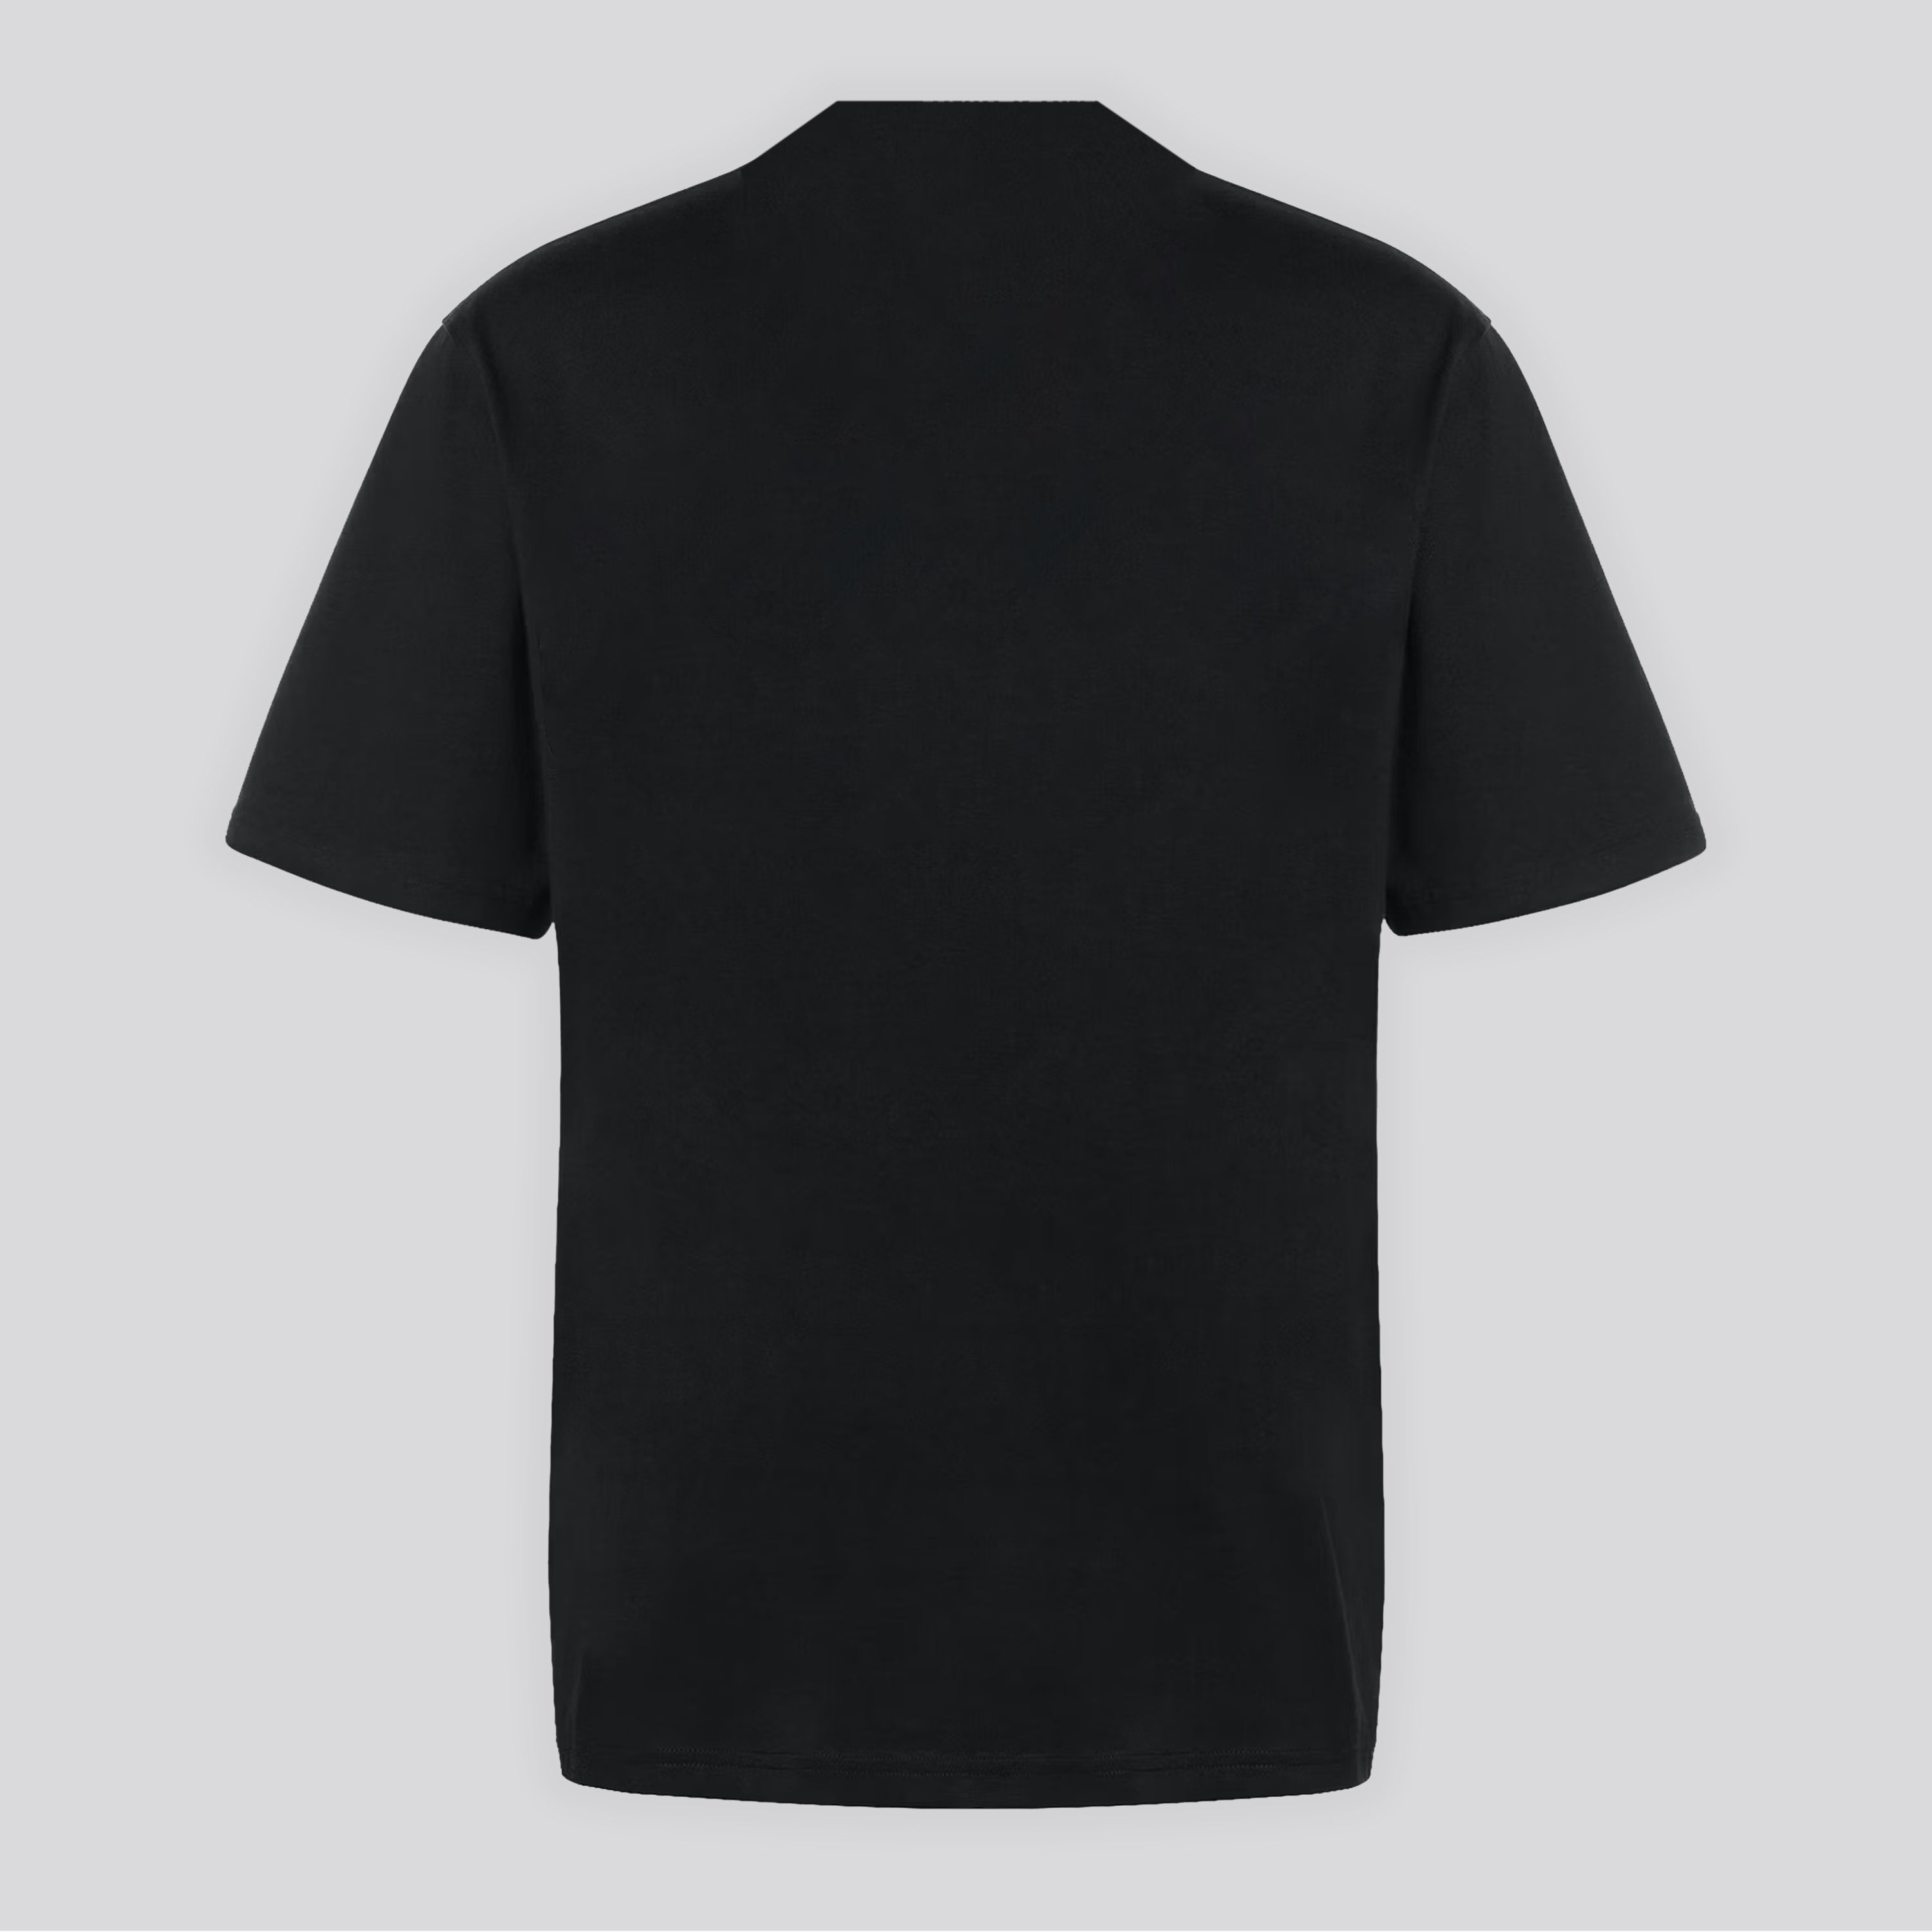 Camiseta Negro Moschino Couture